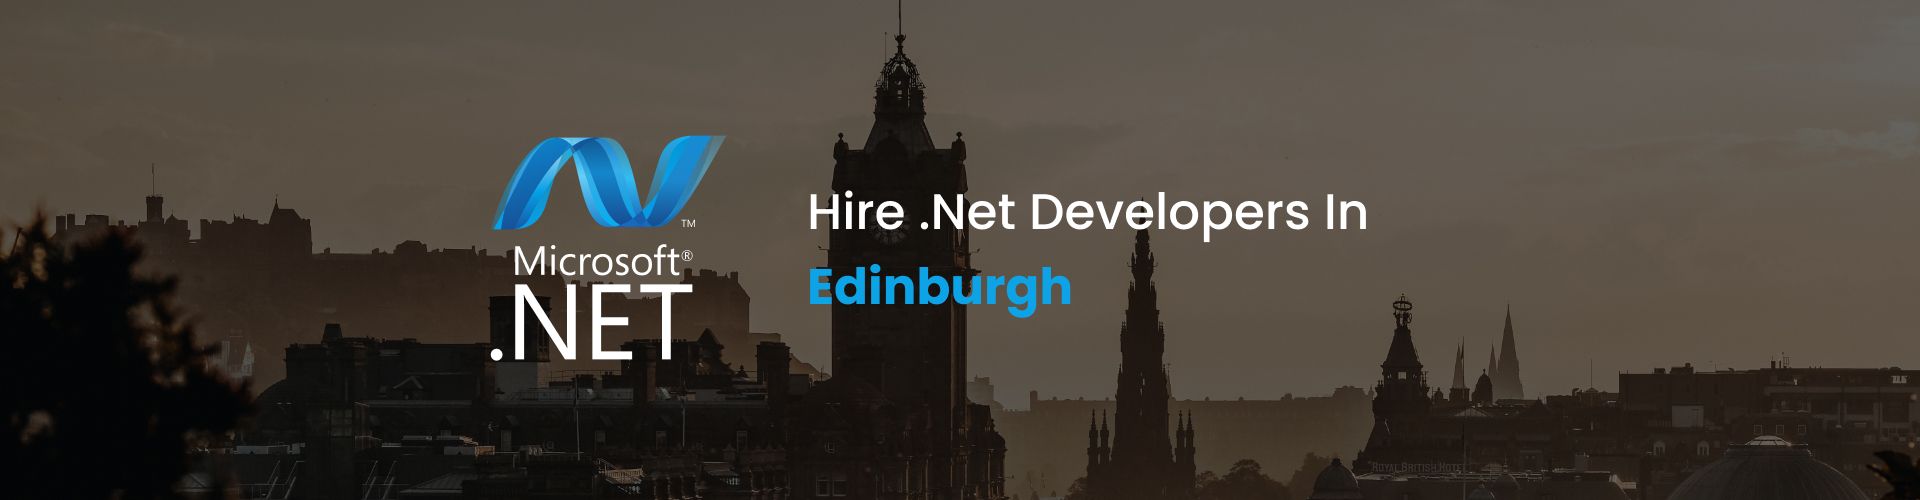 hire dot net developers in edinburgh